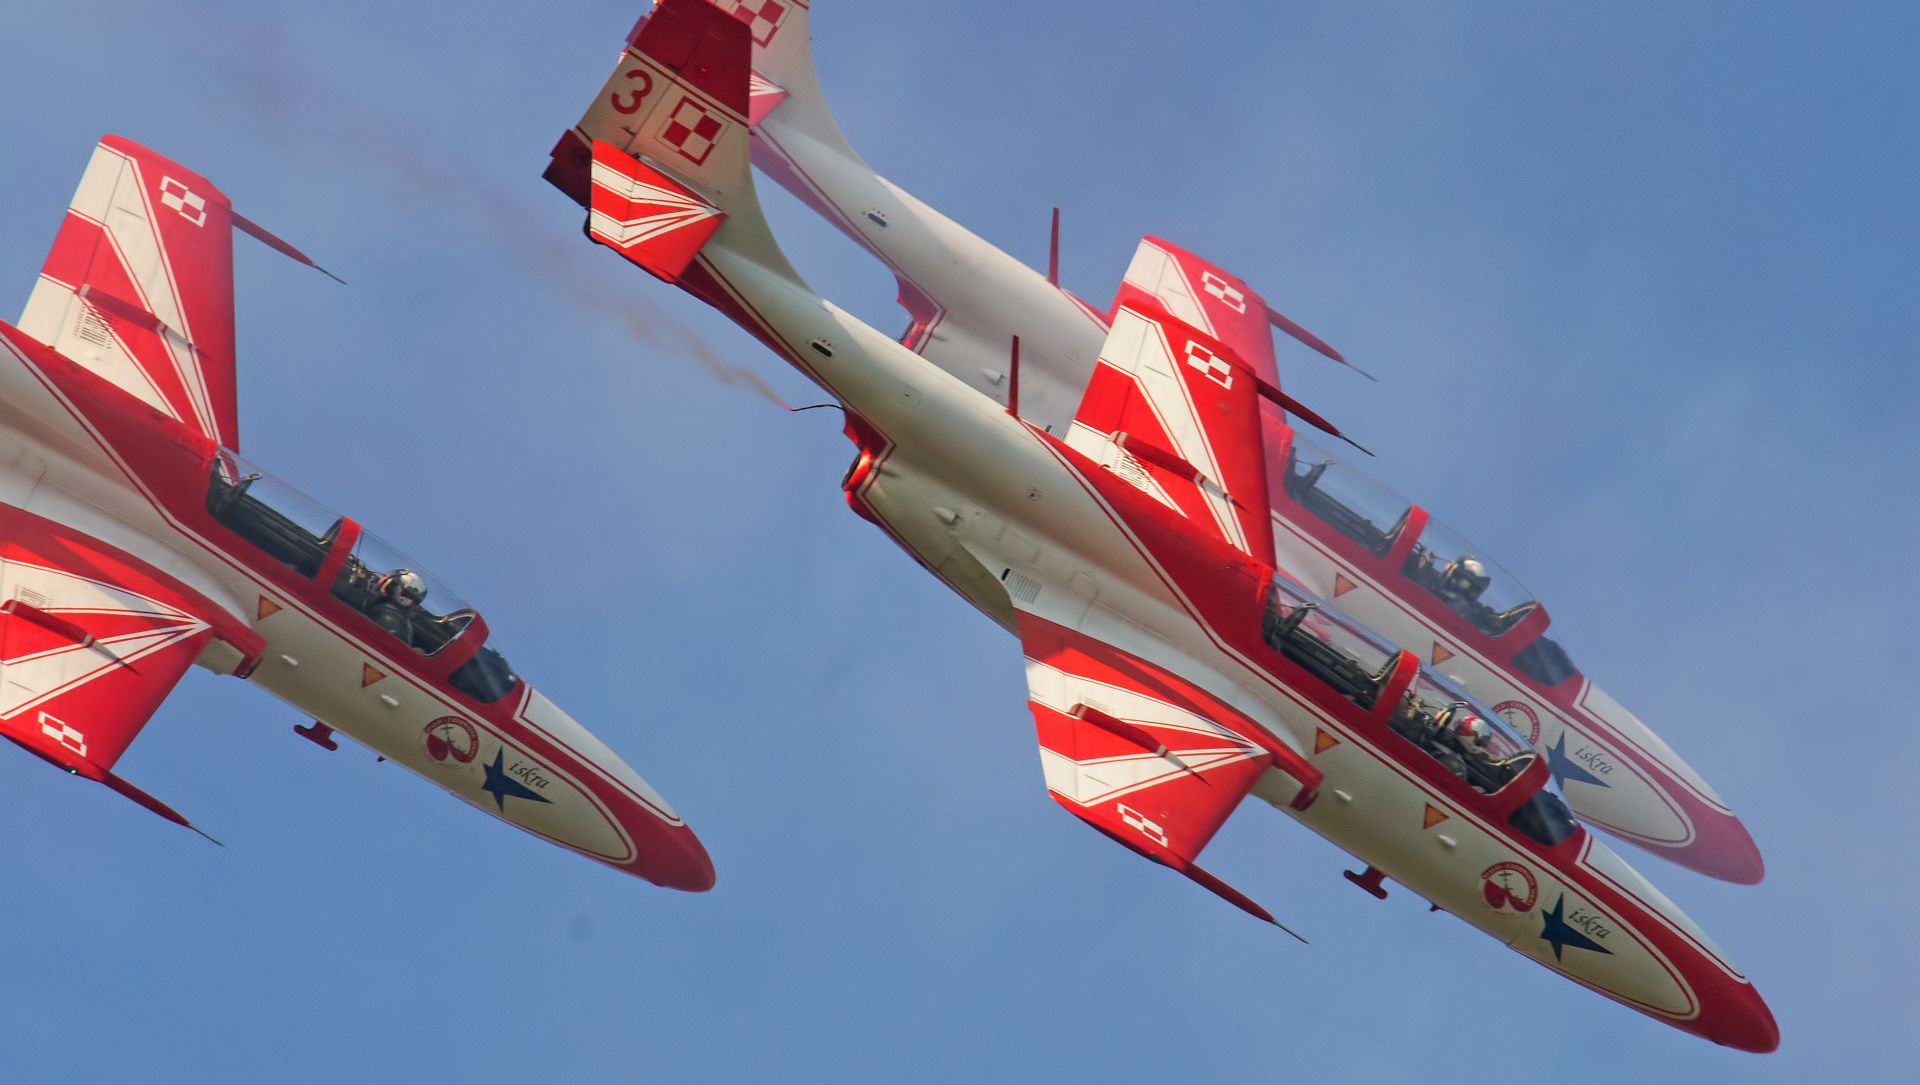 Polish 'White-and-Red Sparks' Aerobatics Team